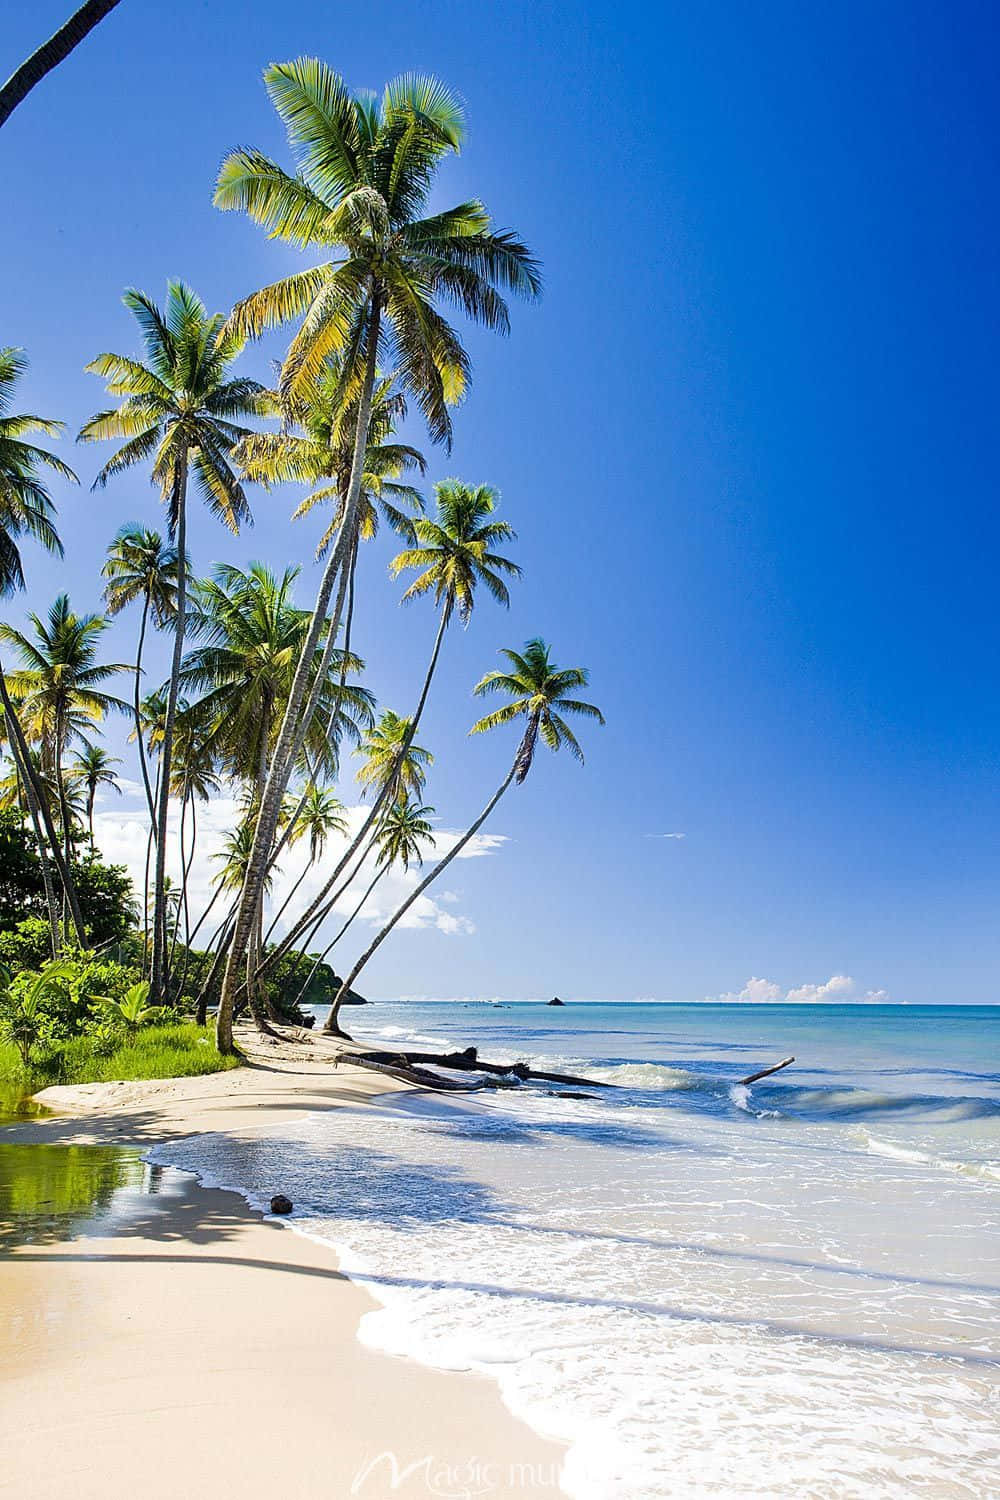 Image  Majestic Palm Trees Lining Graceful White Sand Beach